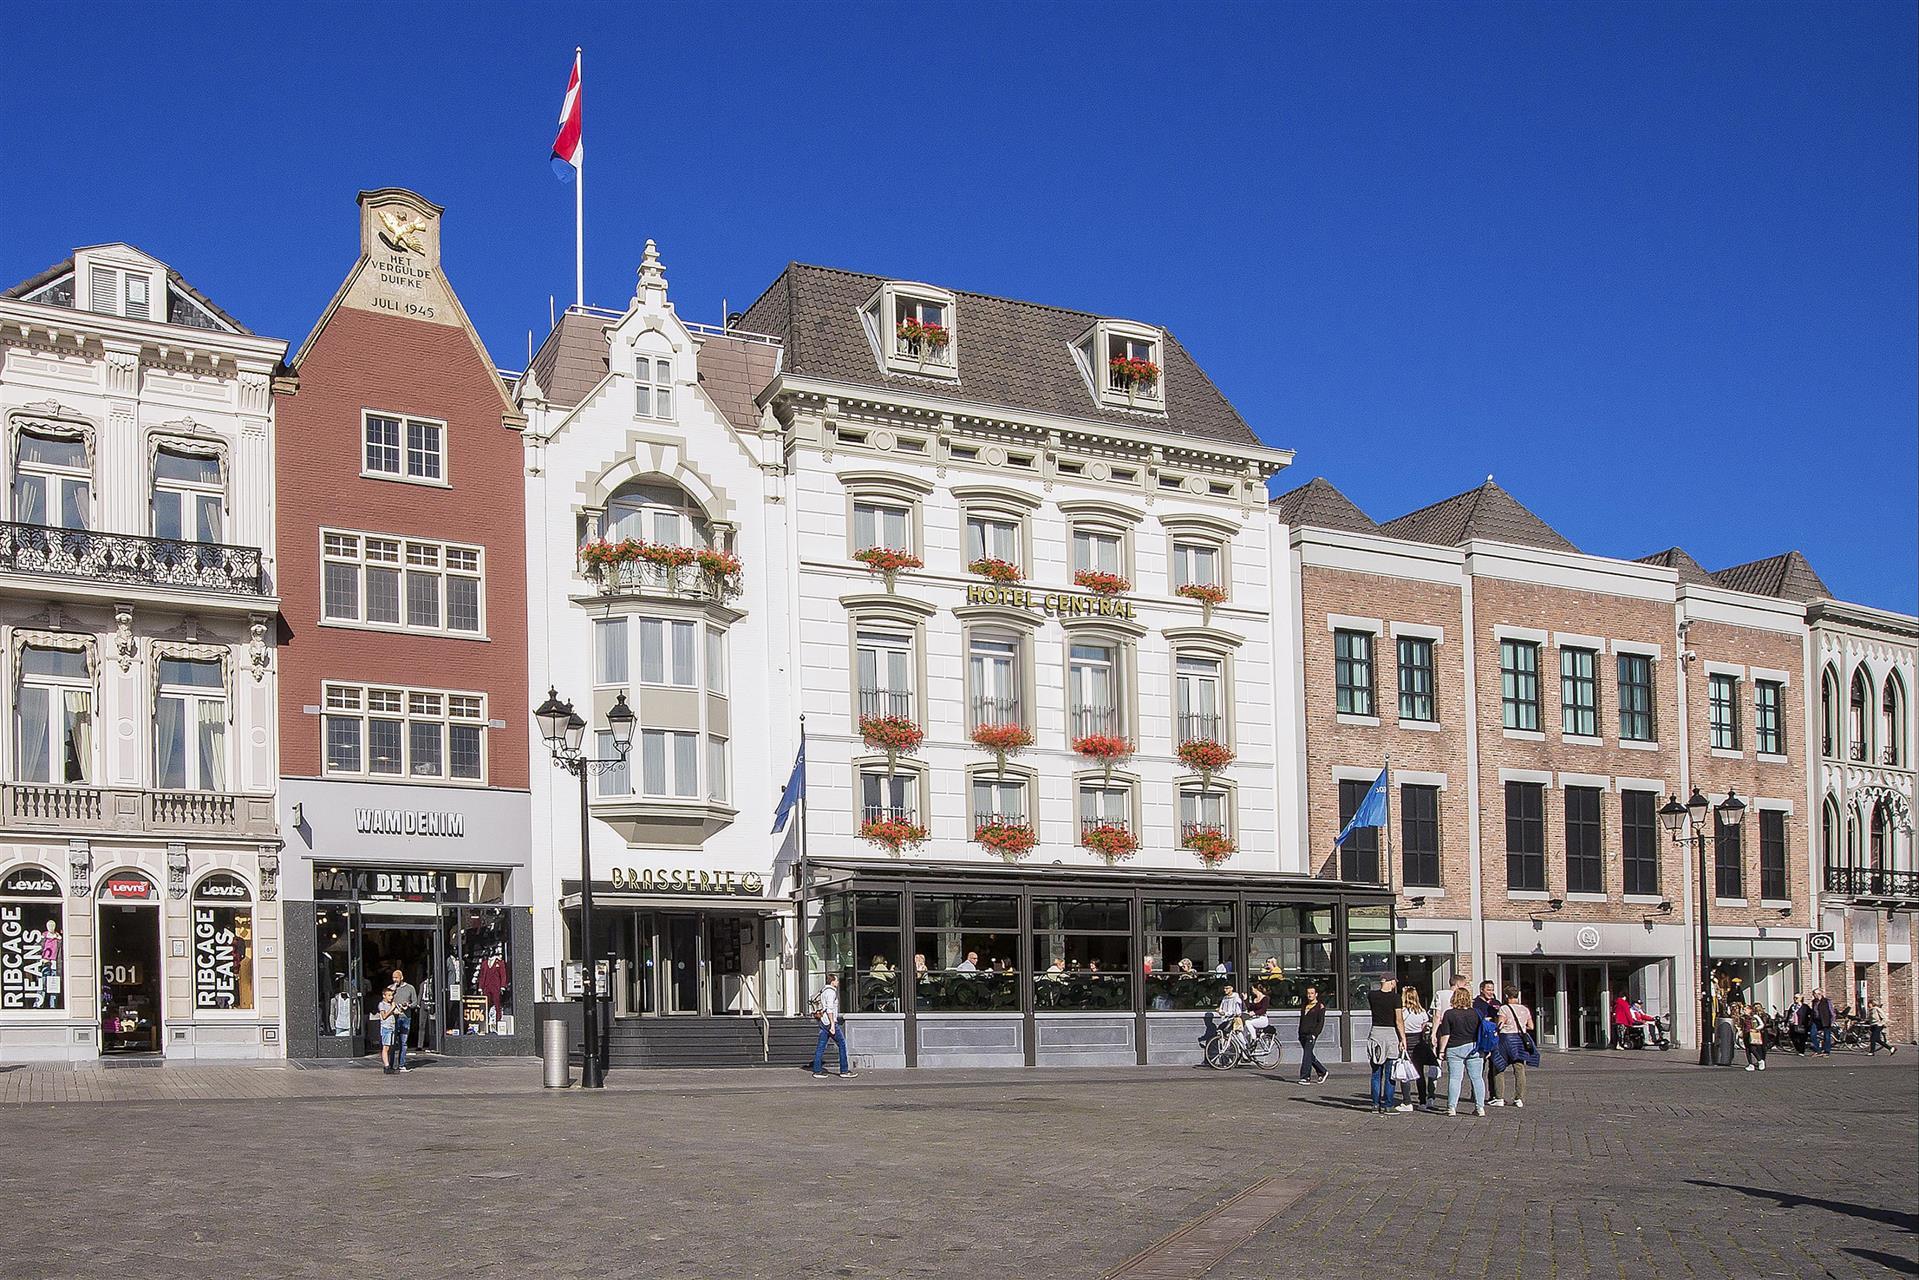 Golden Tulip Hotel Central in 's-Hertogenbosch, NL